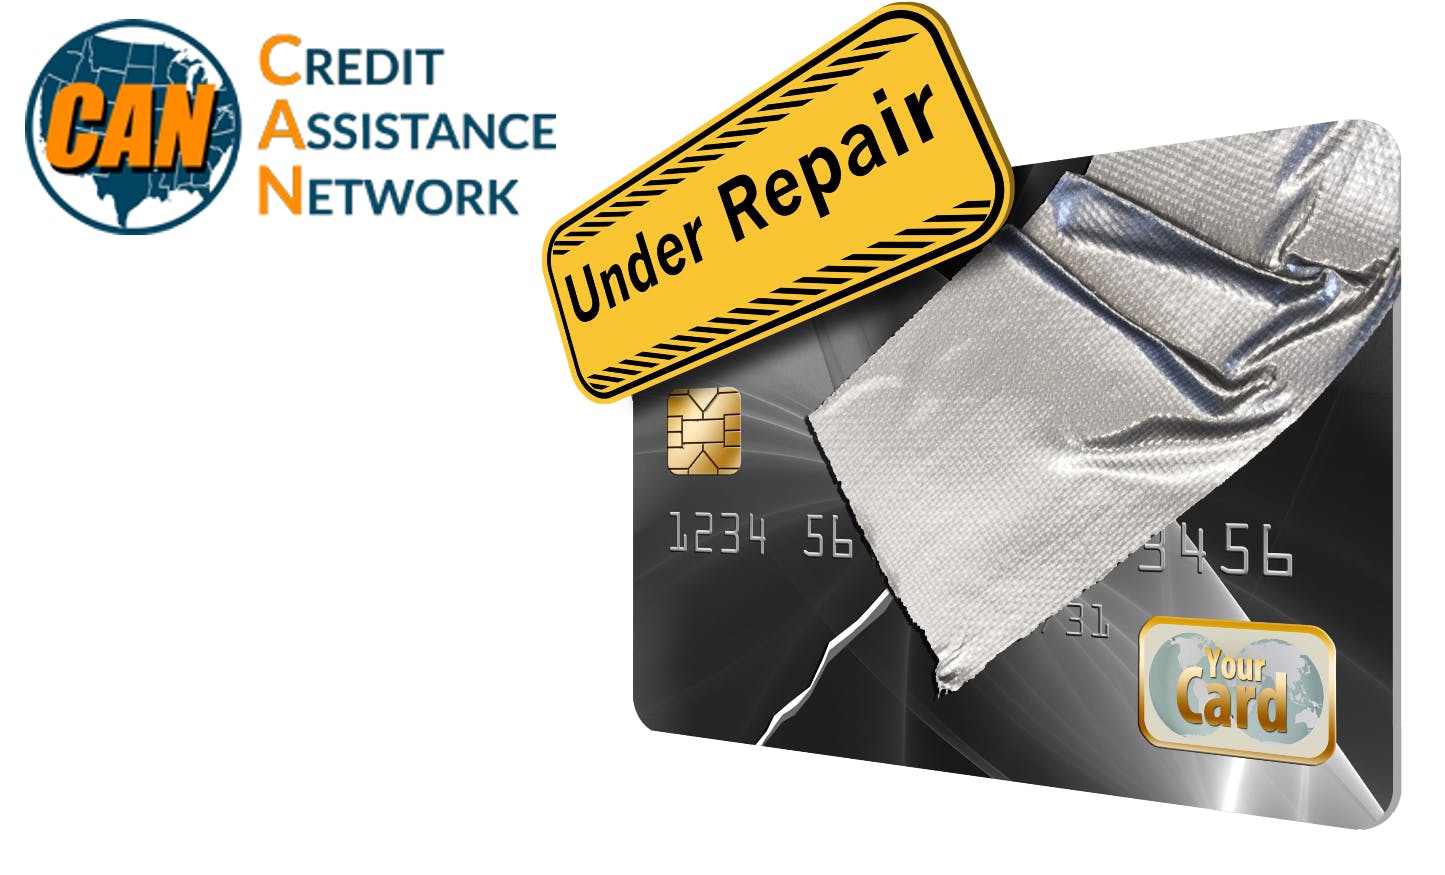 Credit Assistance Network: Credit Improvement & Repair